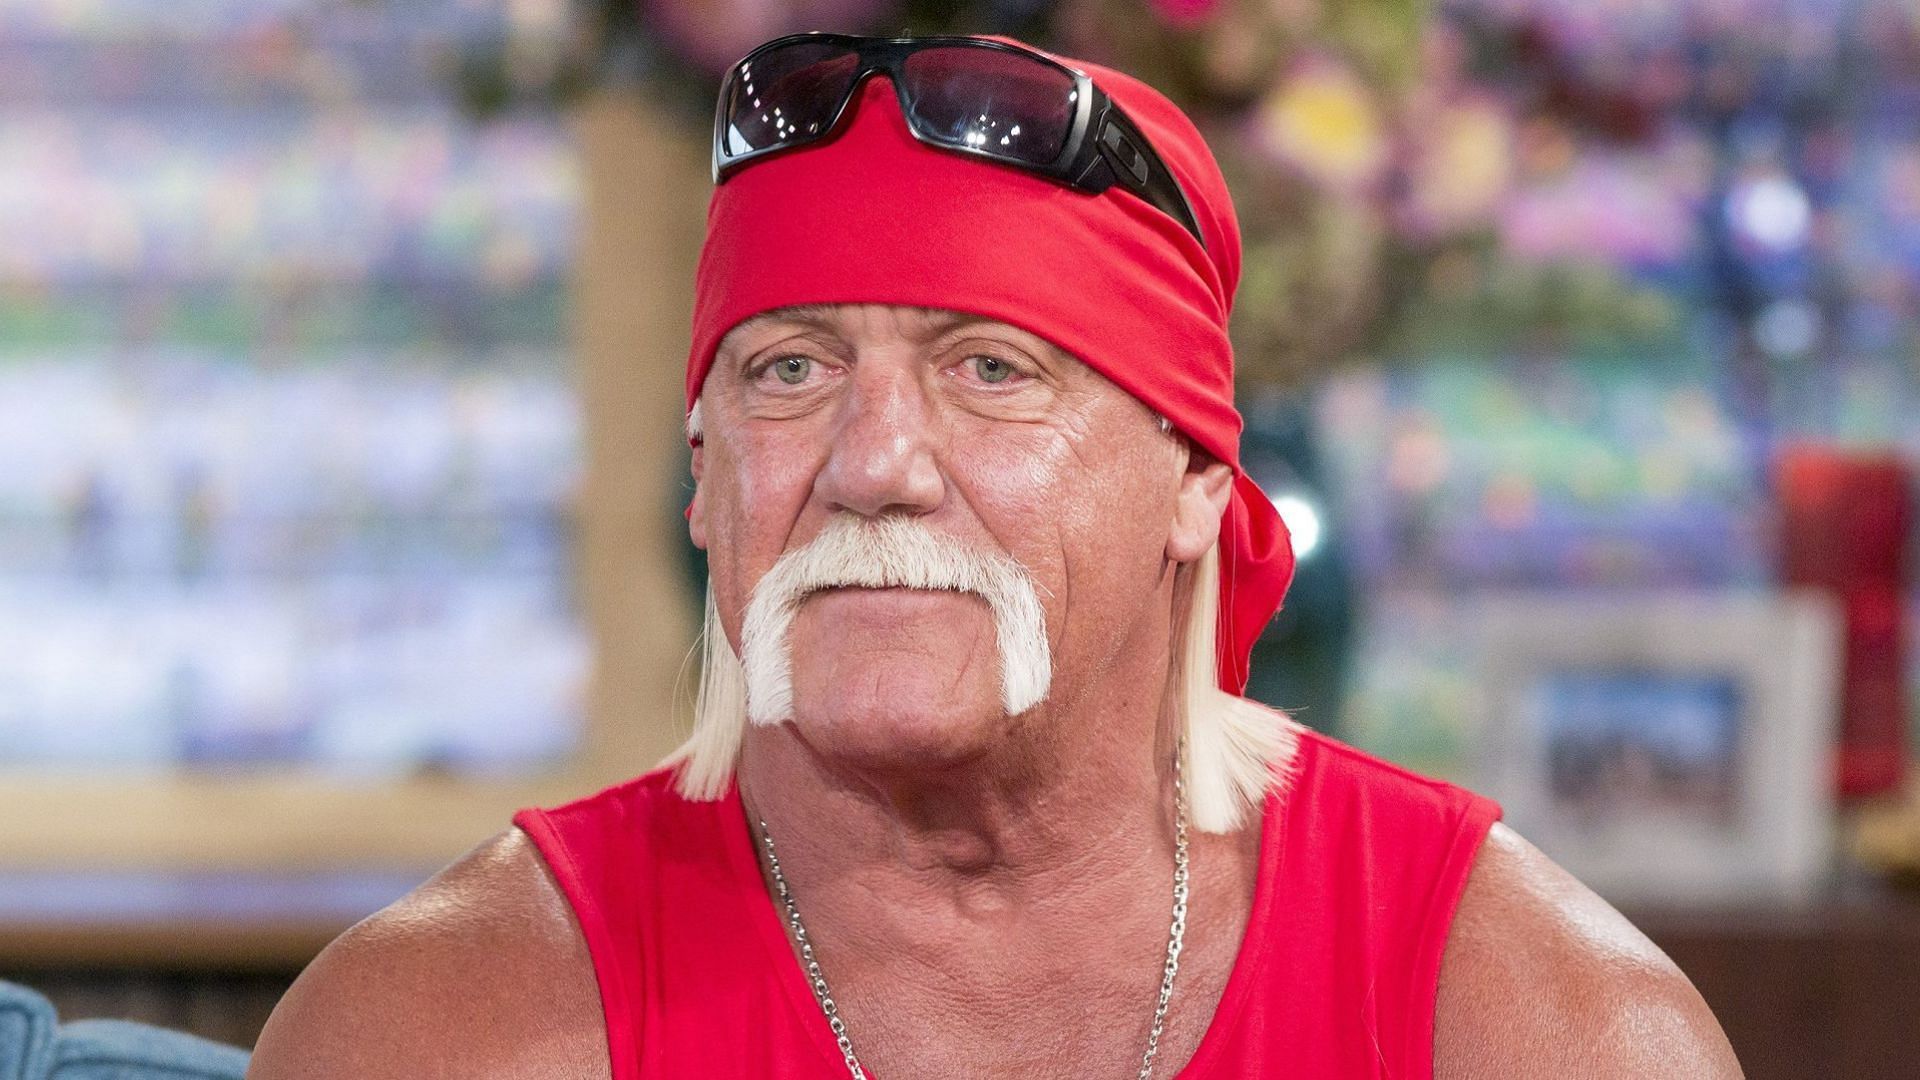 CM Punk has not held back from criticizing Hogan